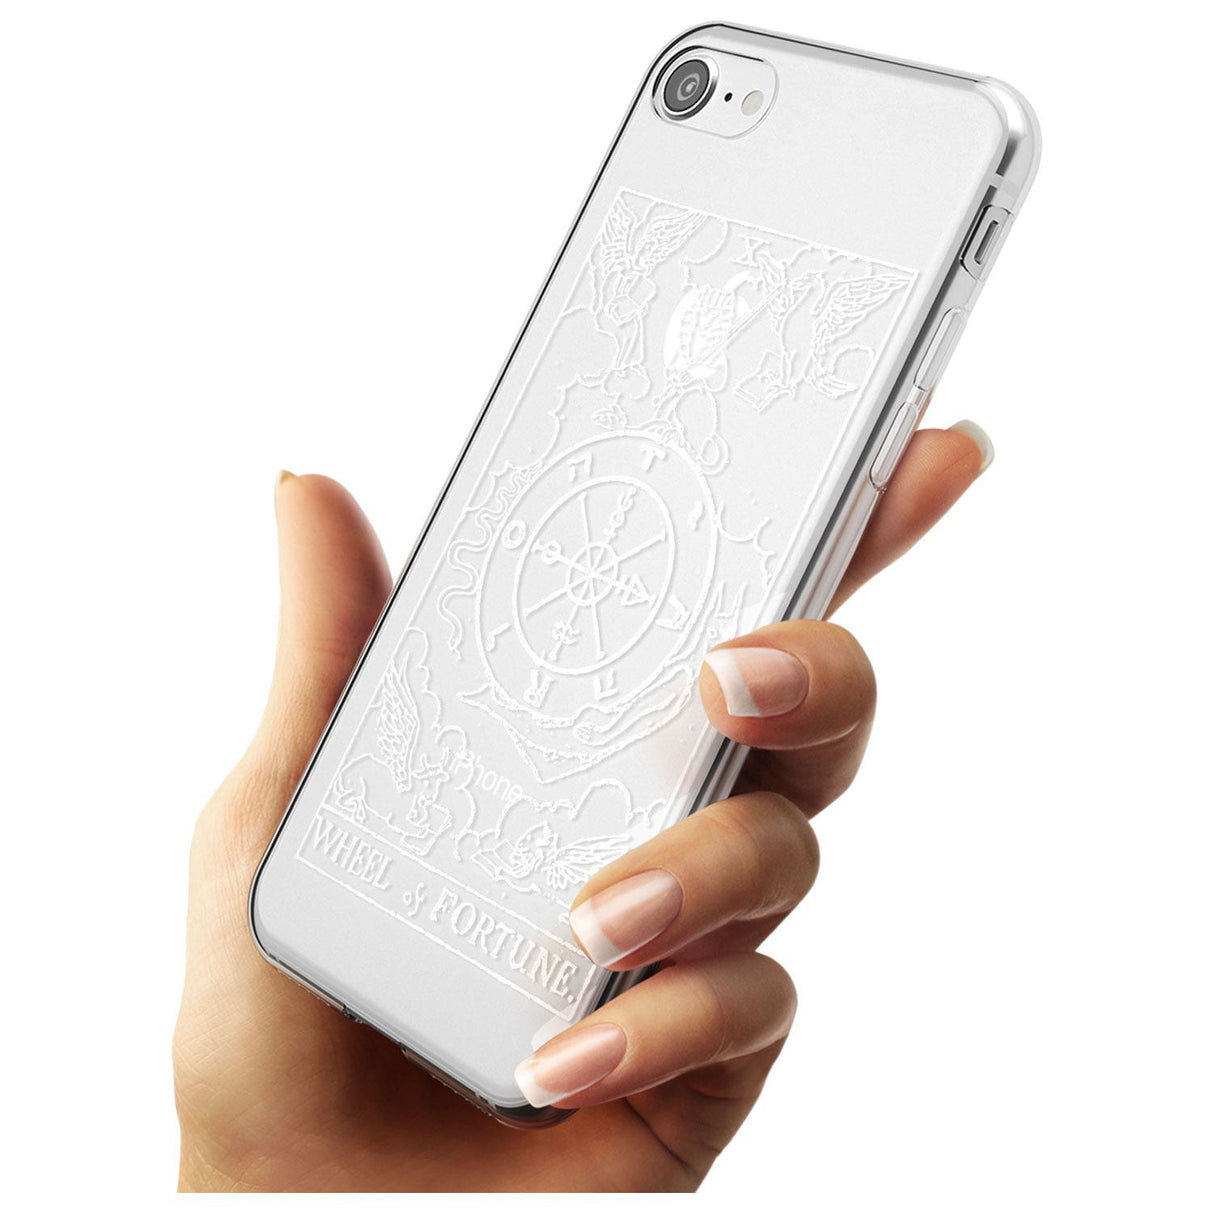 Wheel of Fortune Tarot Card - White Transparent Black Impact Phone Case for iPhone SE 8 7 Plus